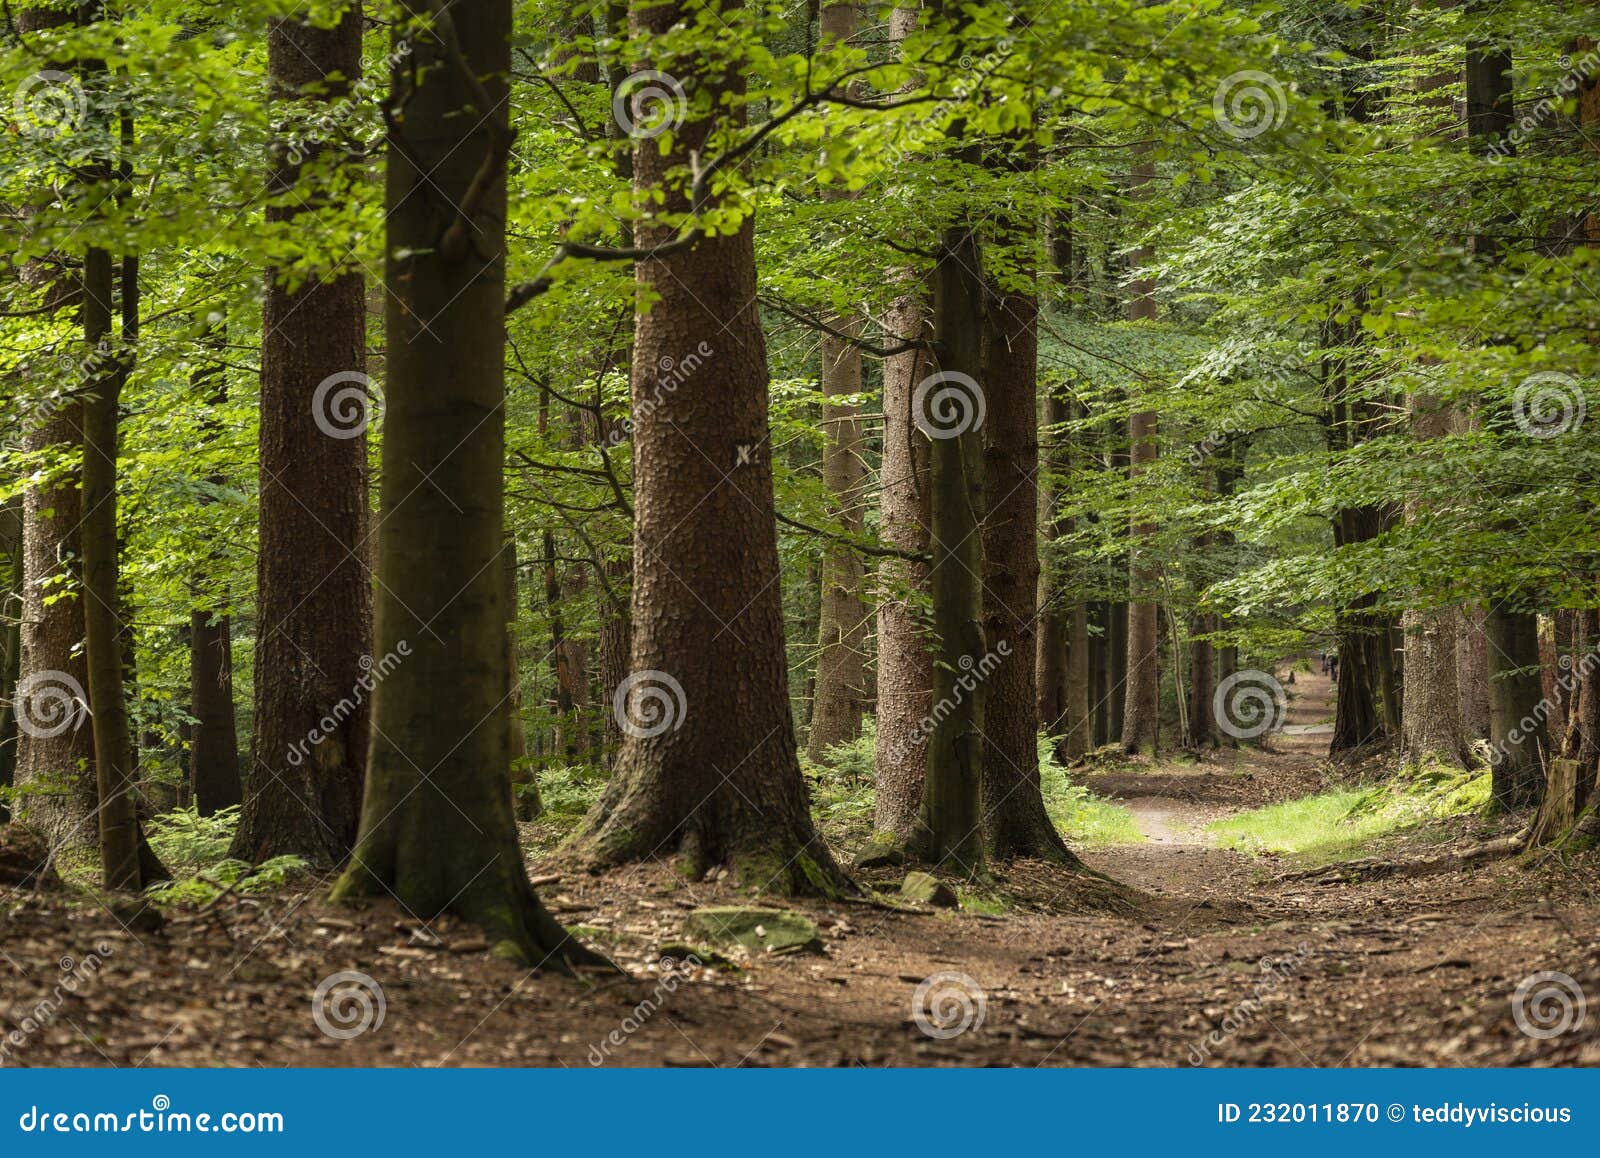 doe alstublieft niet officieel Inpakken Mooie Woudwandelende Weg Morth Teutoburg Bos Duitsland Stock Foto - Image  of boom, mooi: 232011870